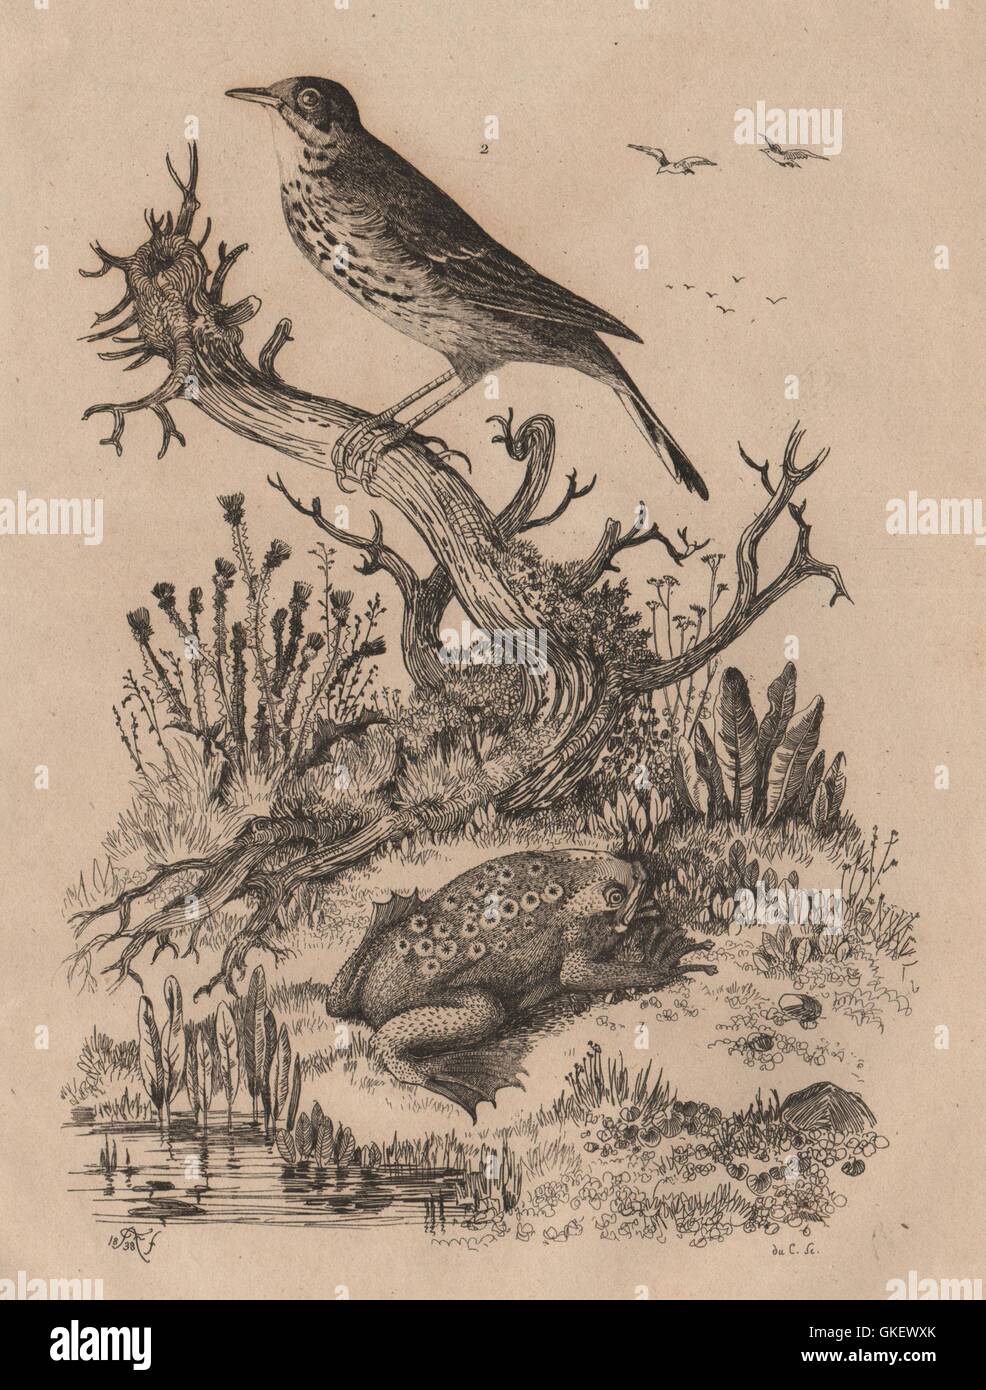 ANIMALS: Pipa (Surinam toad). Pipit bird, antique print 1834 Stock Photo